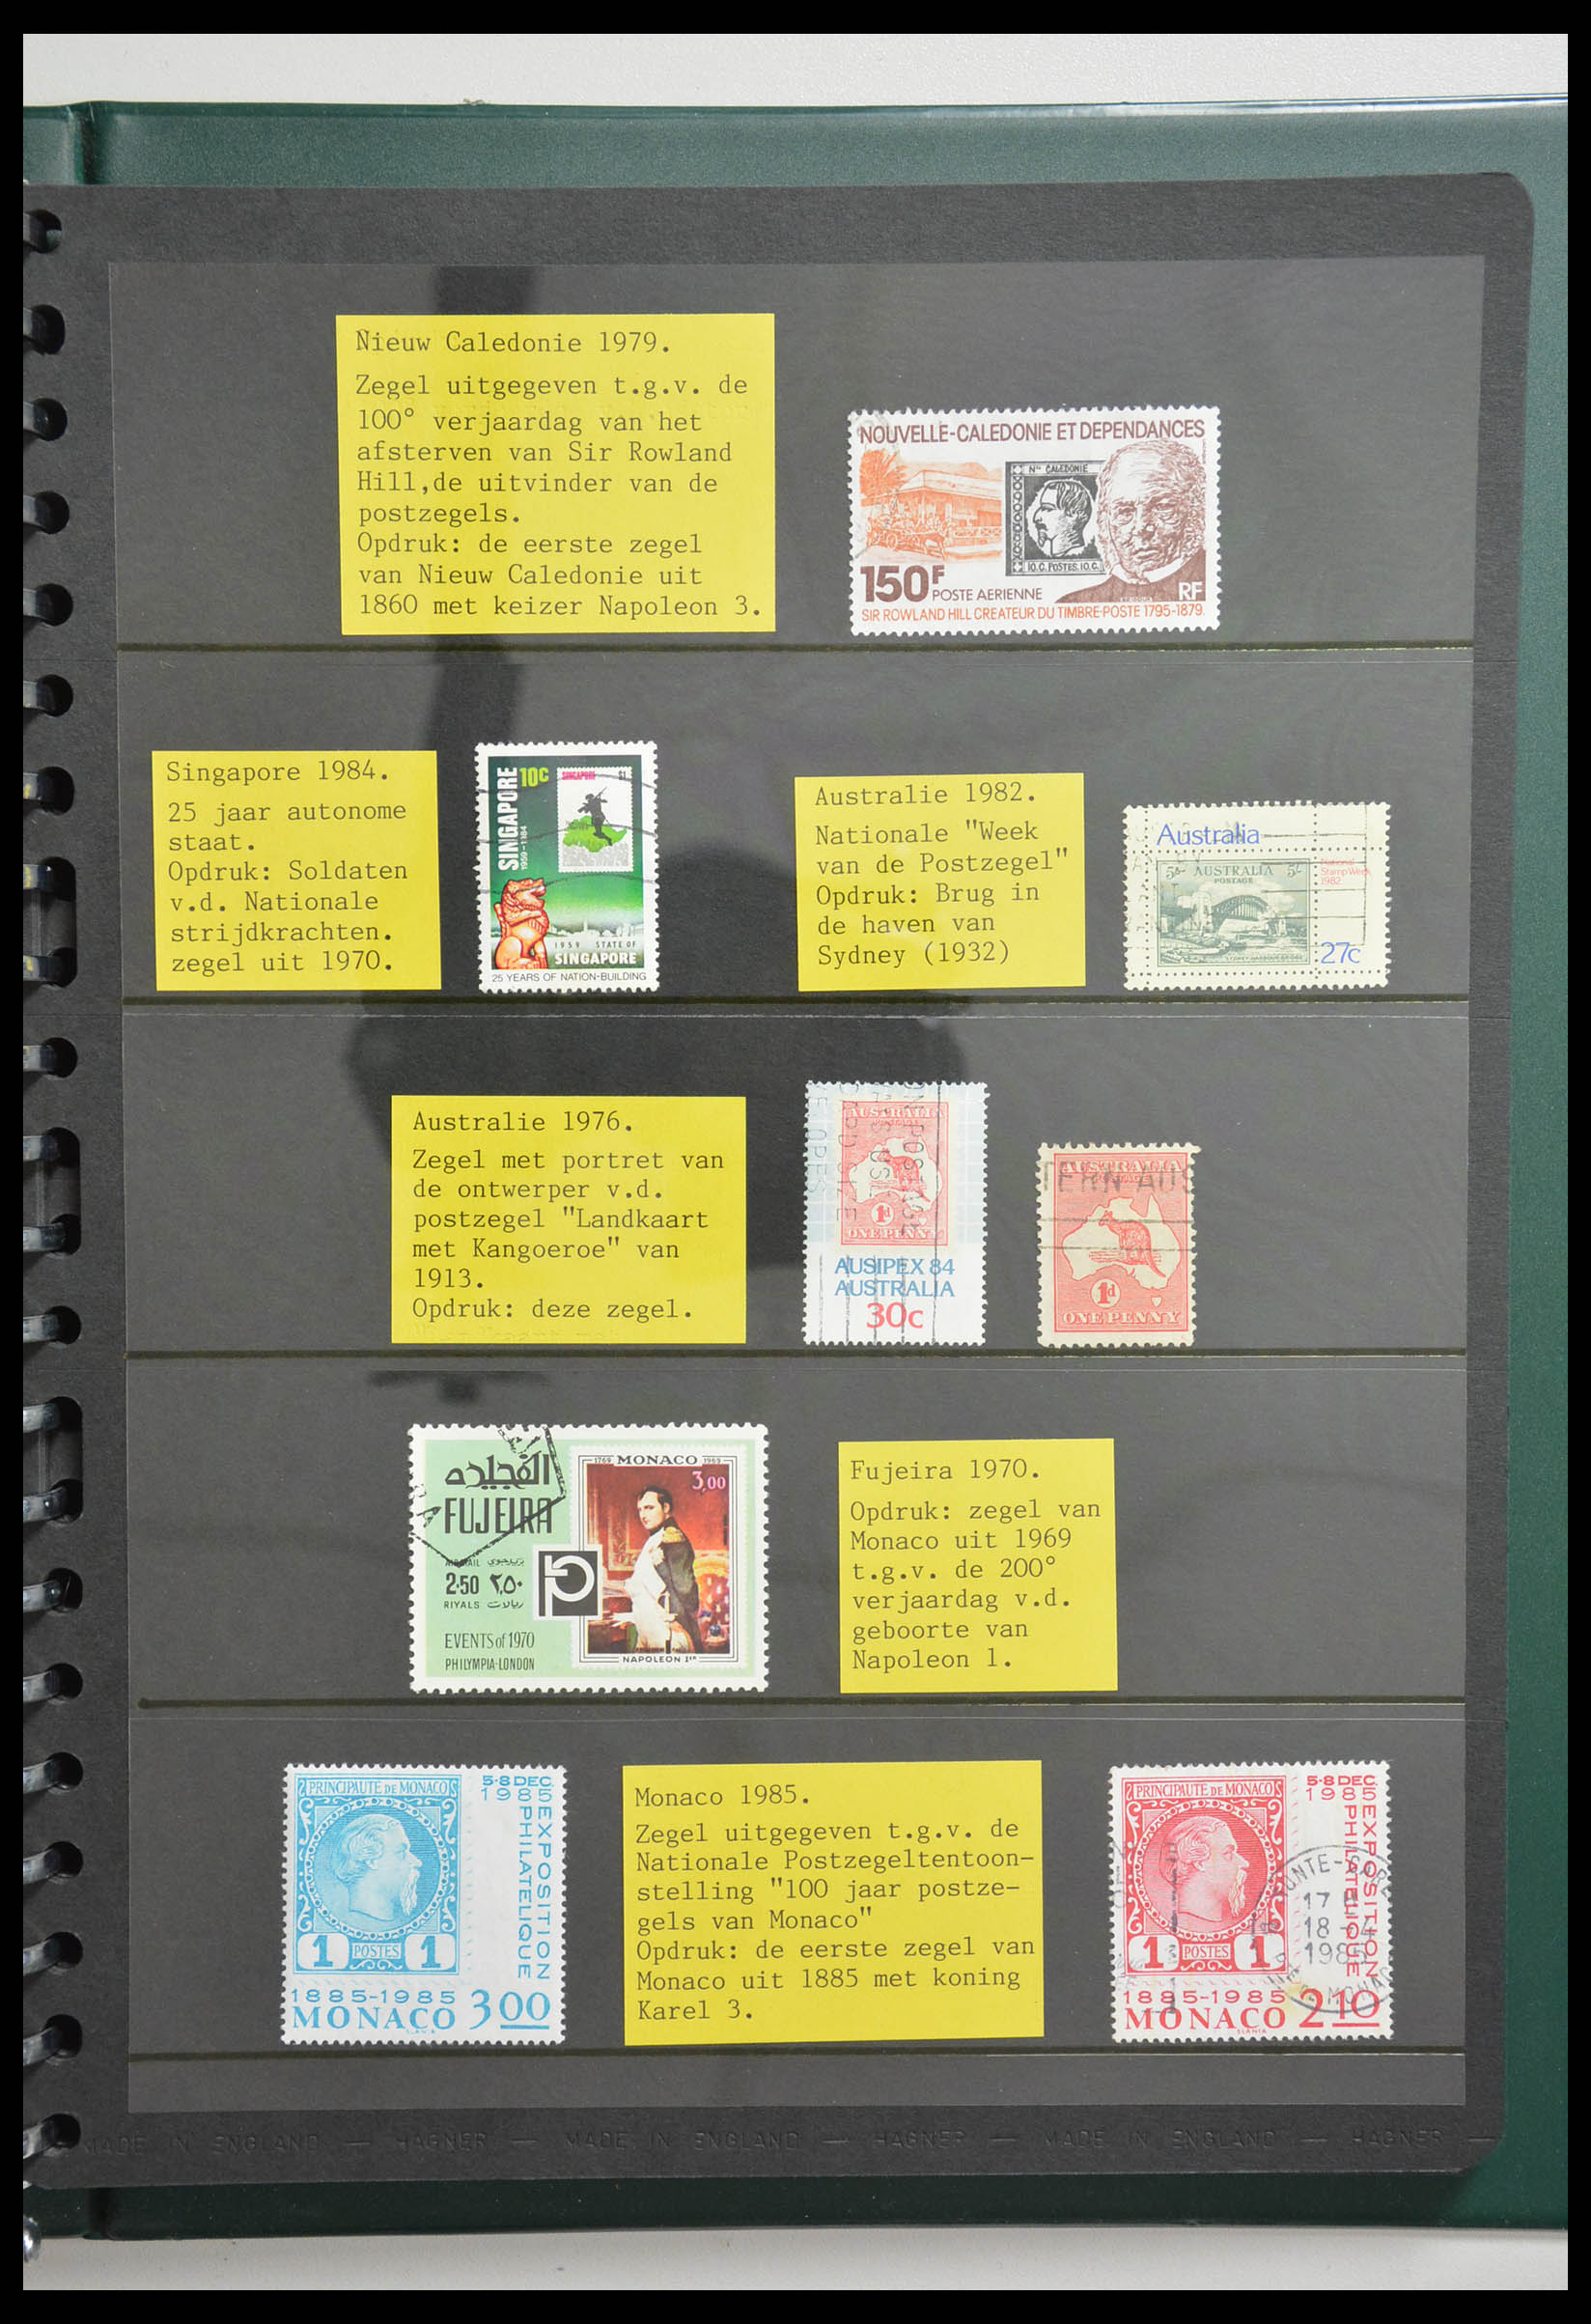 28337 116 - 28337 Postzegel op postzegel 1840-2001.